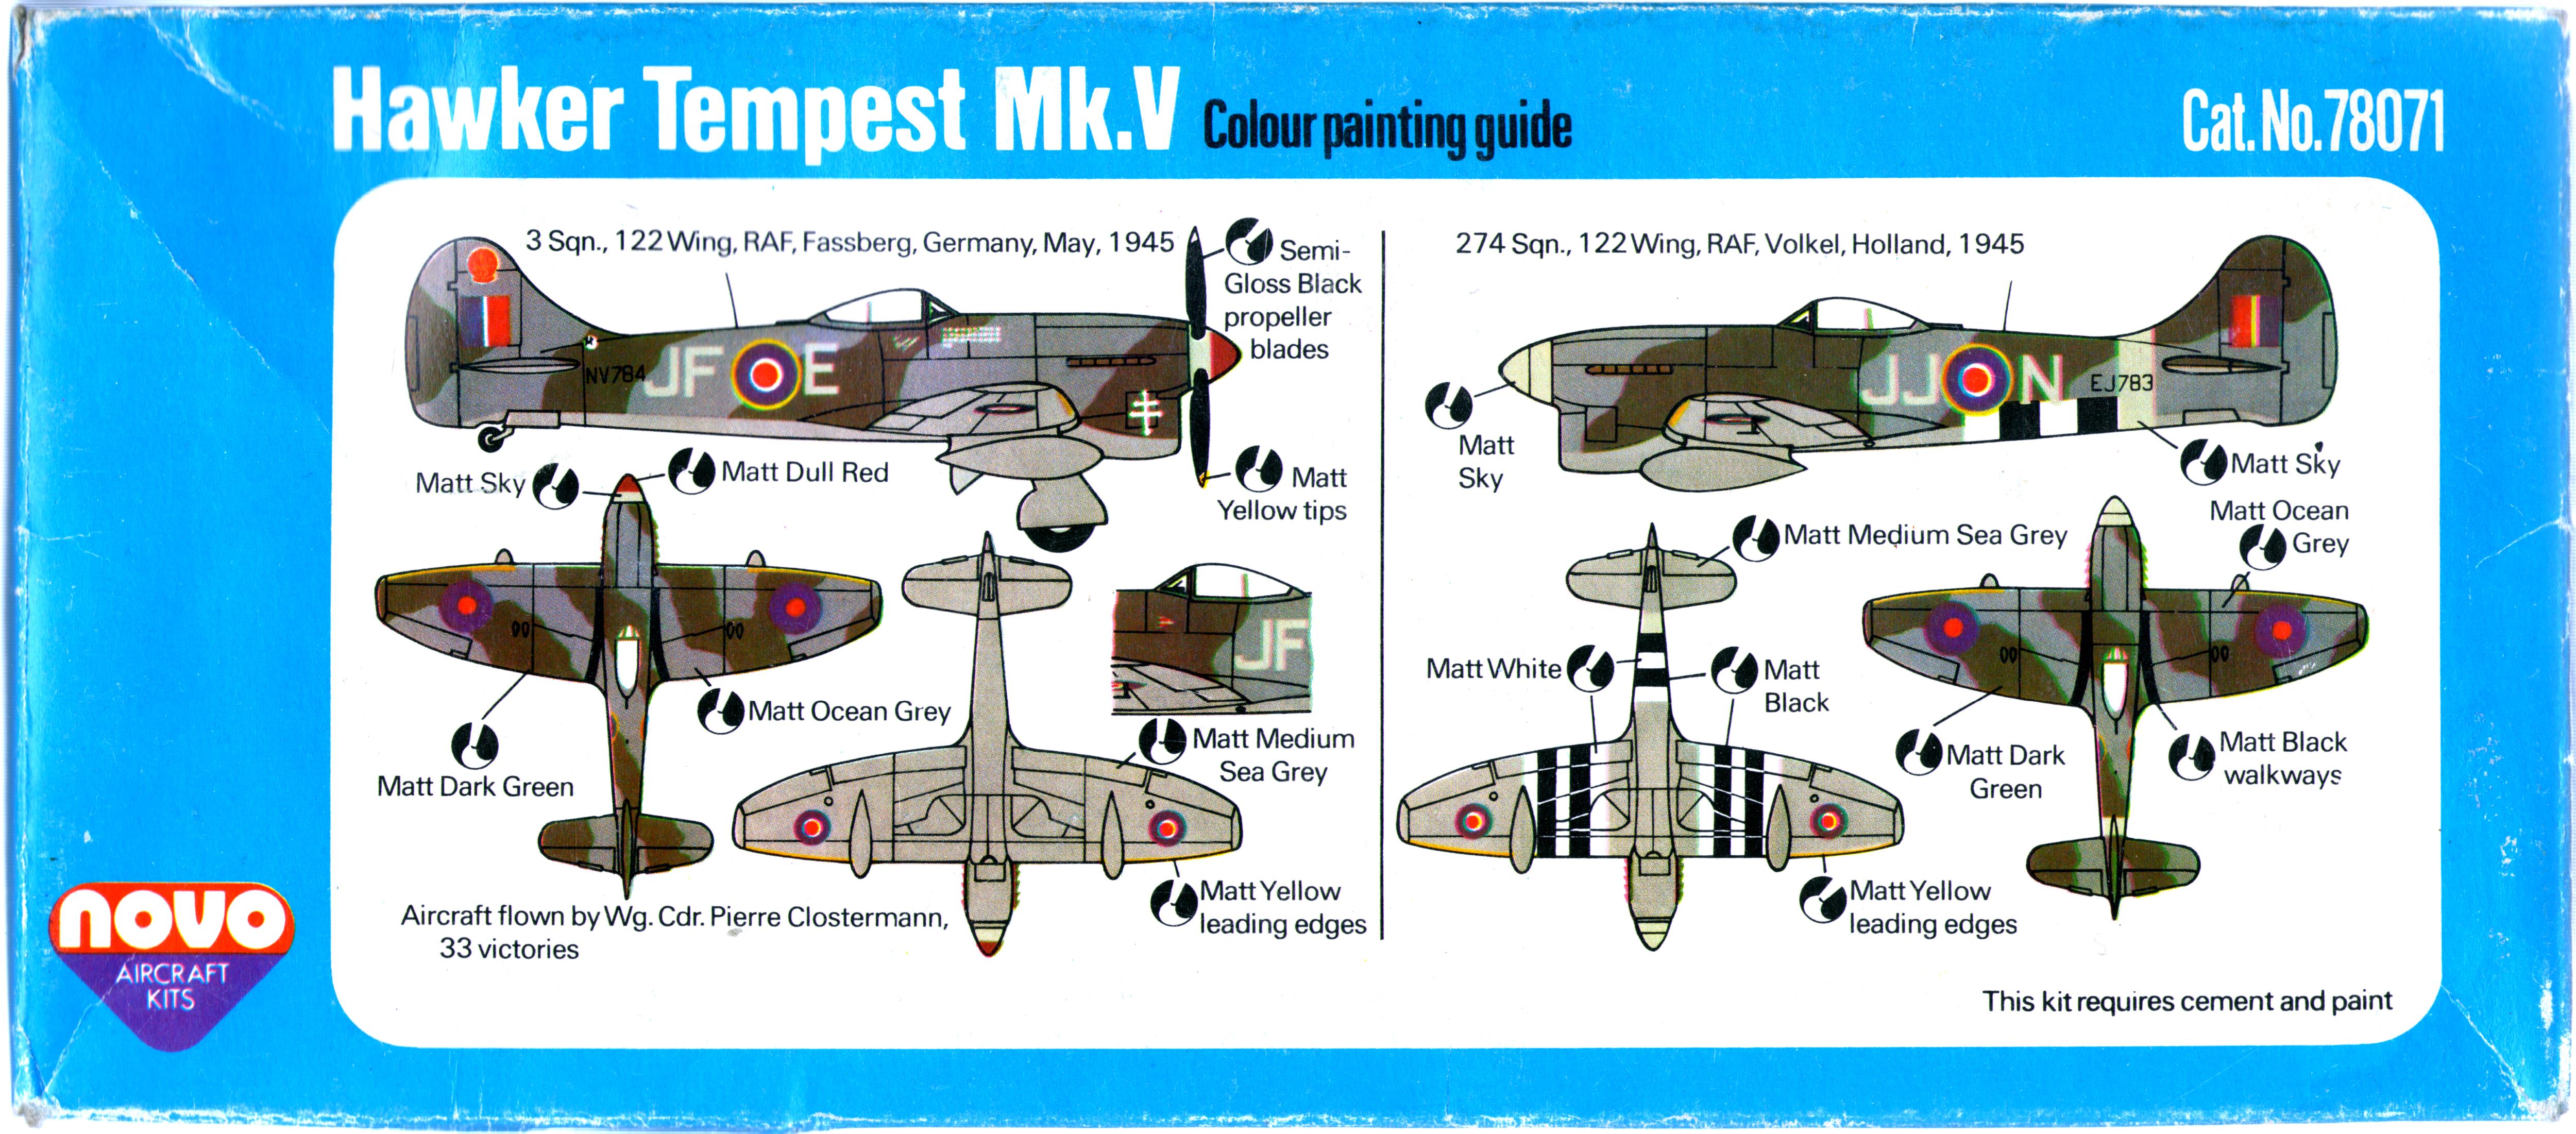 NOVO F212 Tempest Mk.V Fighter Bomber, Cat.No.78071 1979, box top lid